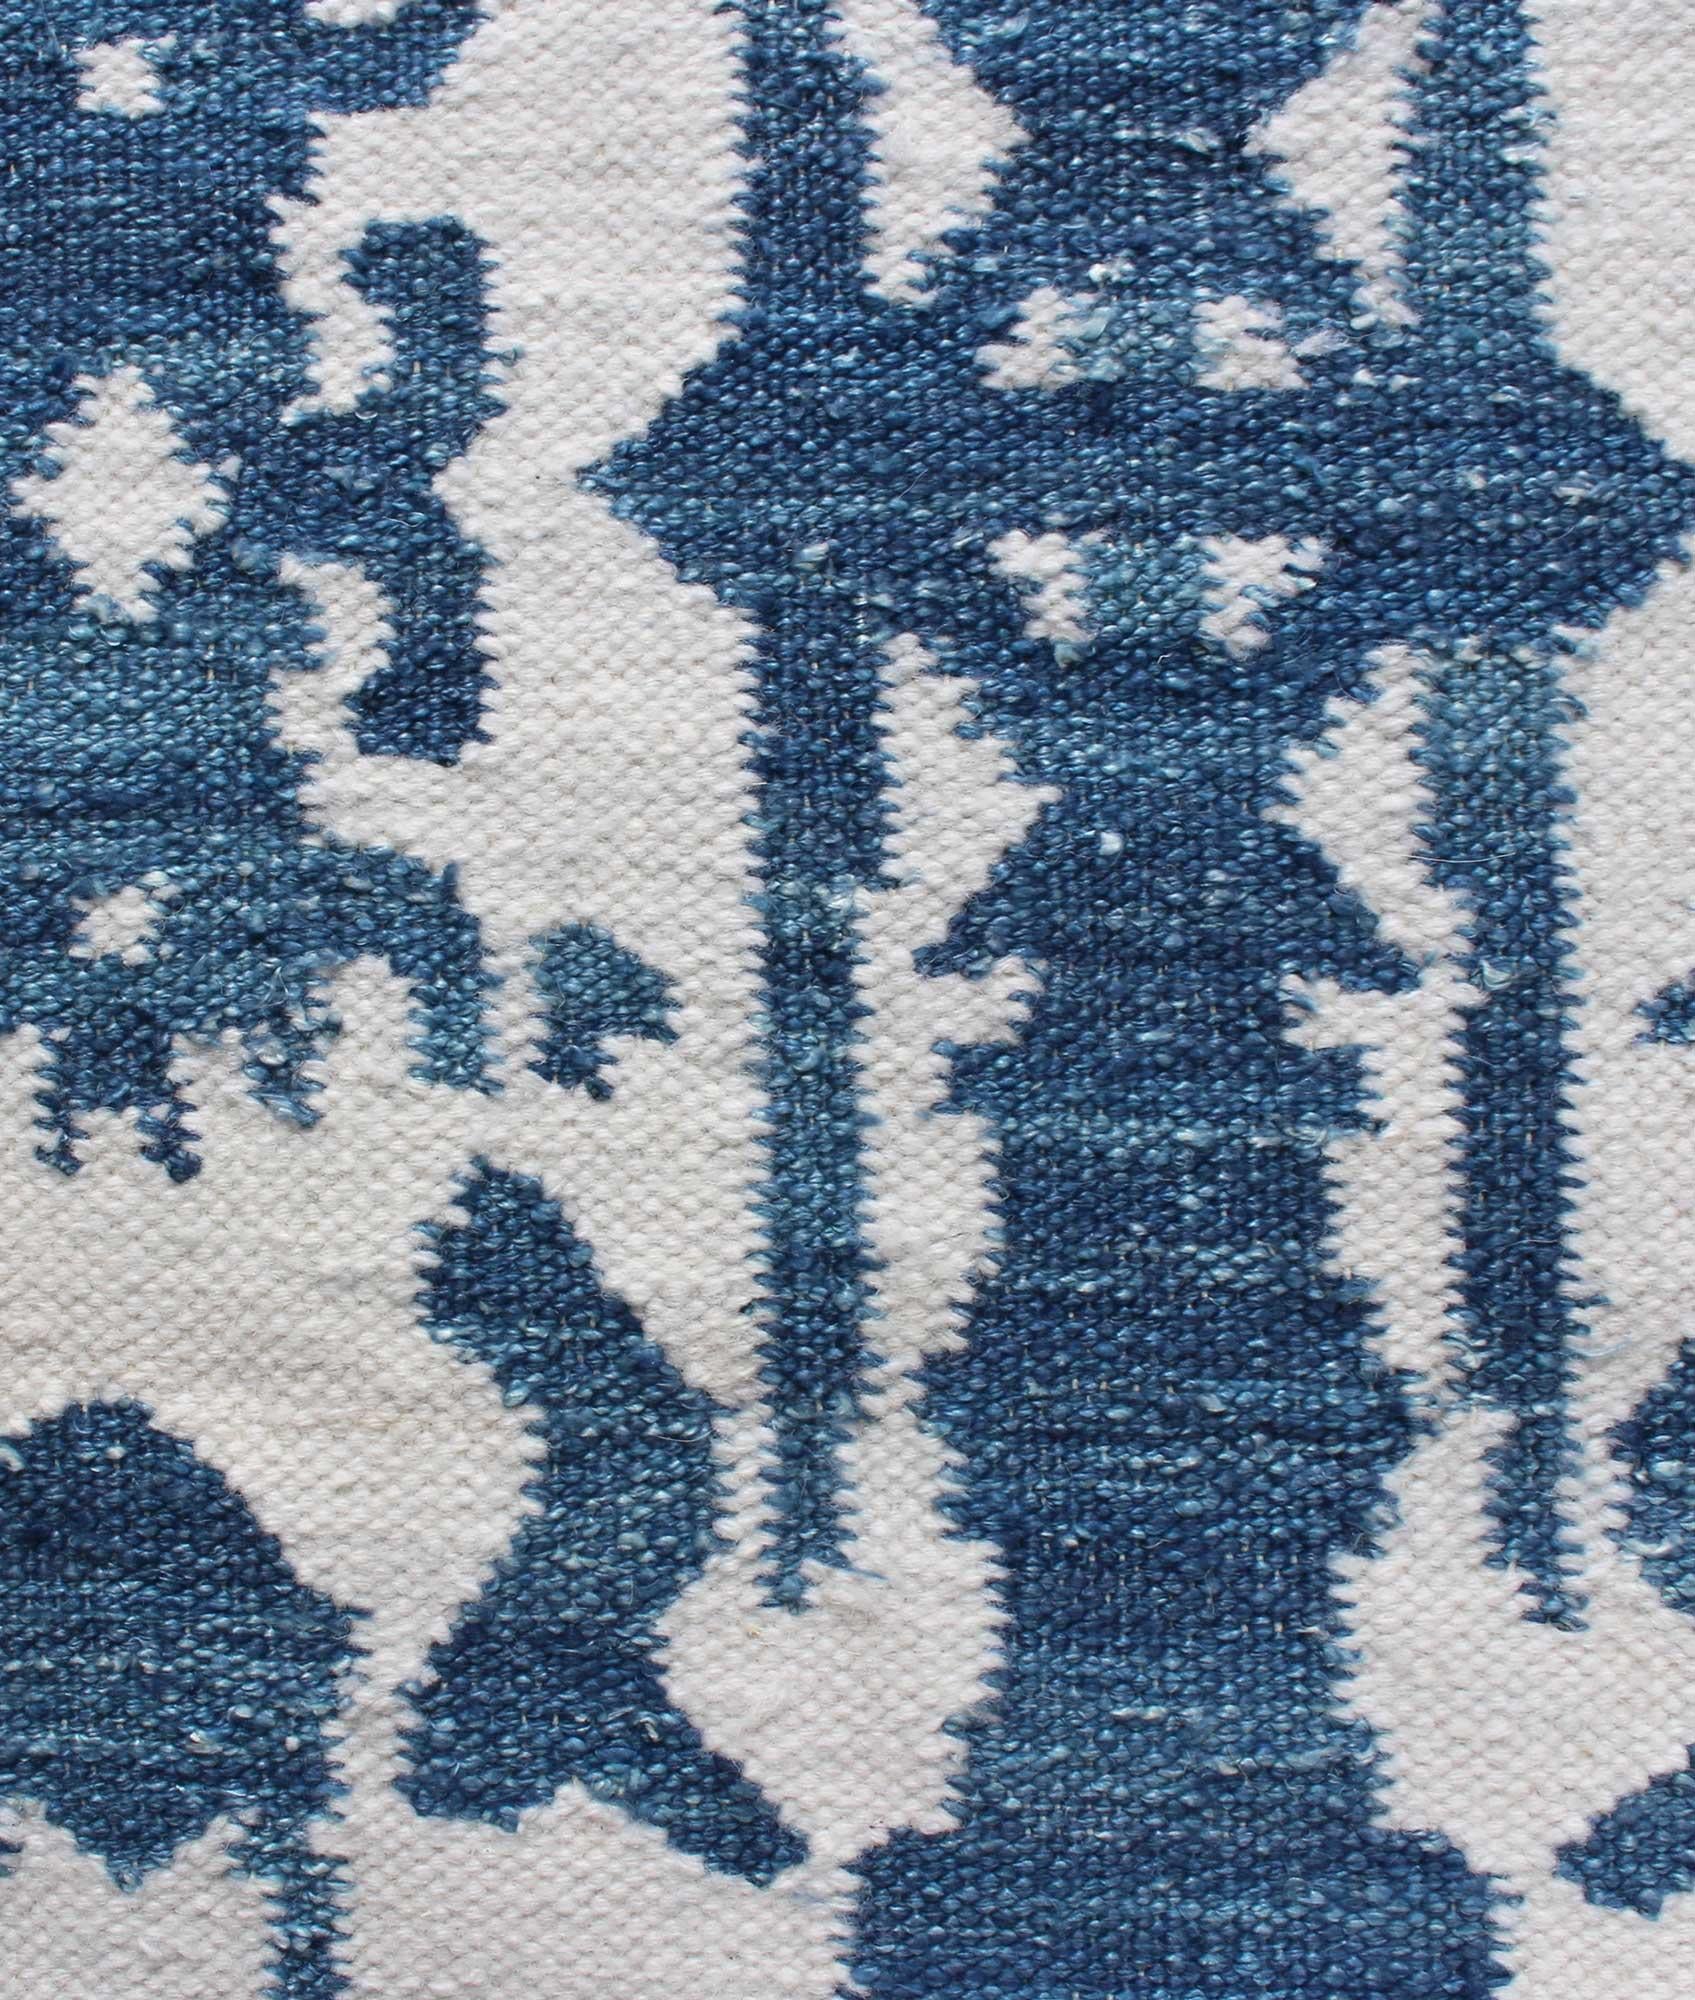 Noué à la main Eskayel, Biami, tapis  tissage plat indigo en vente